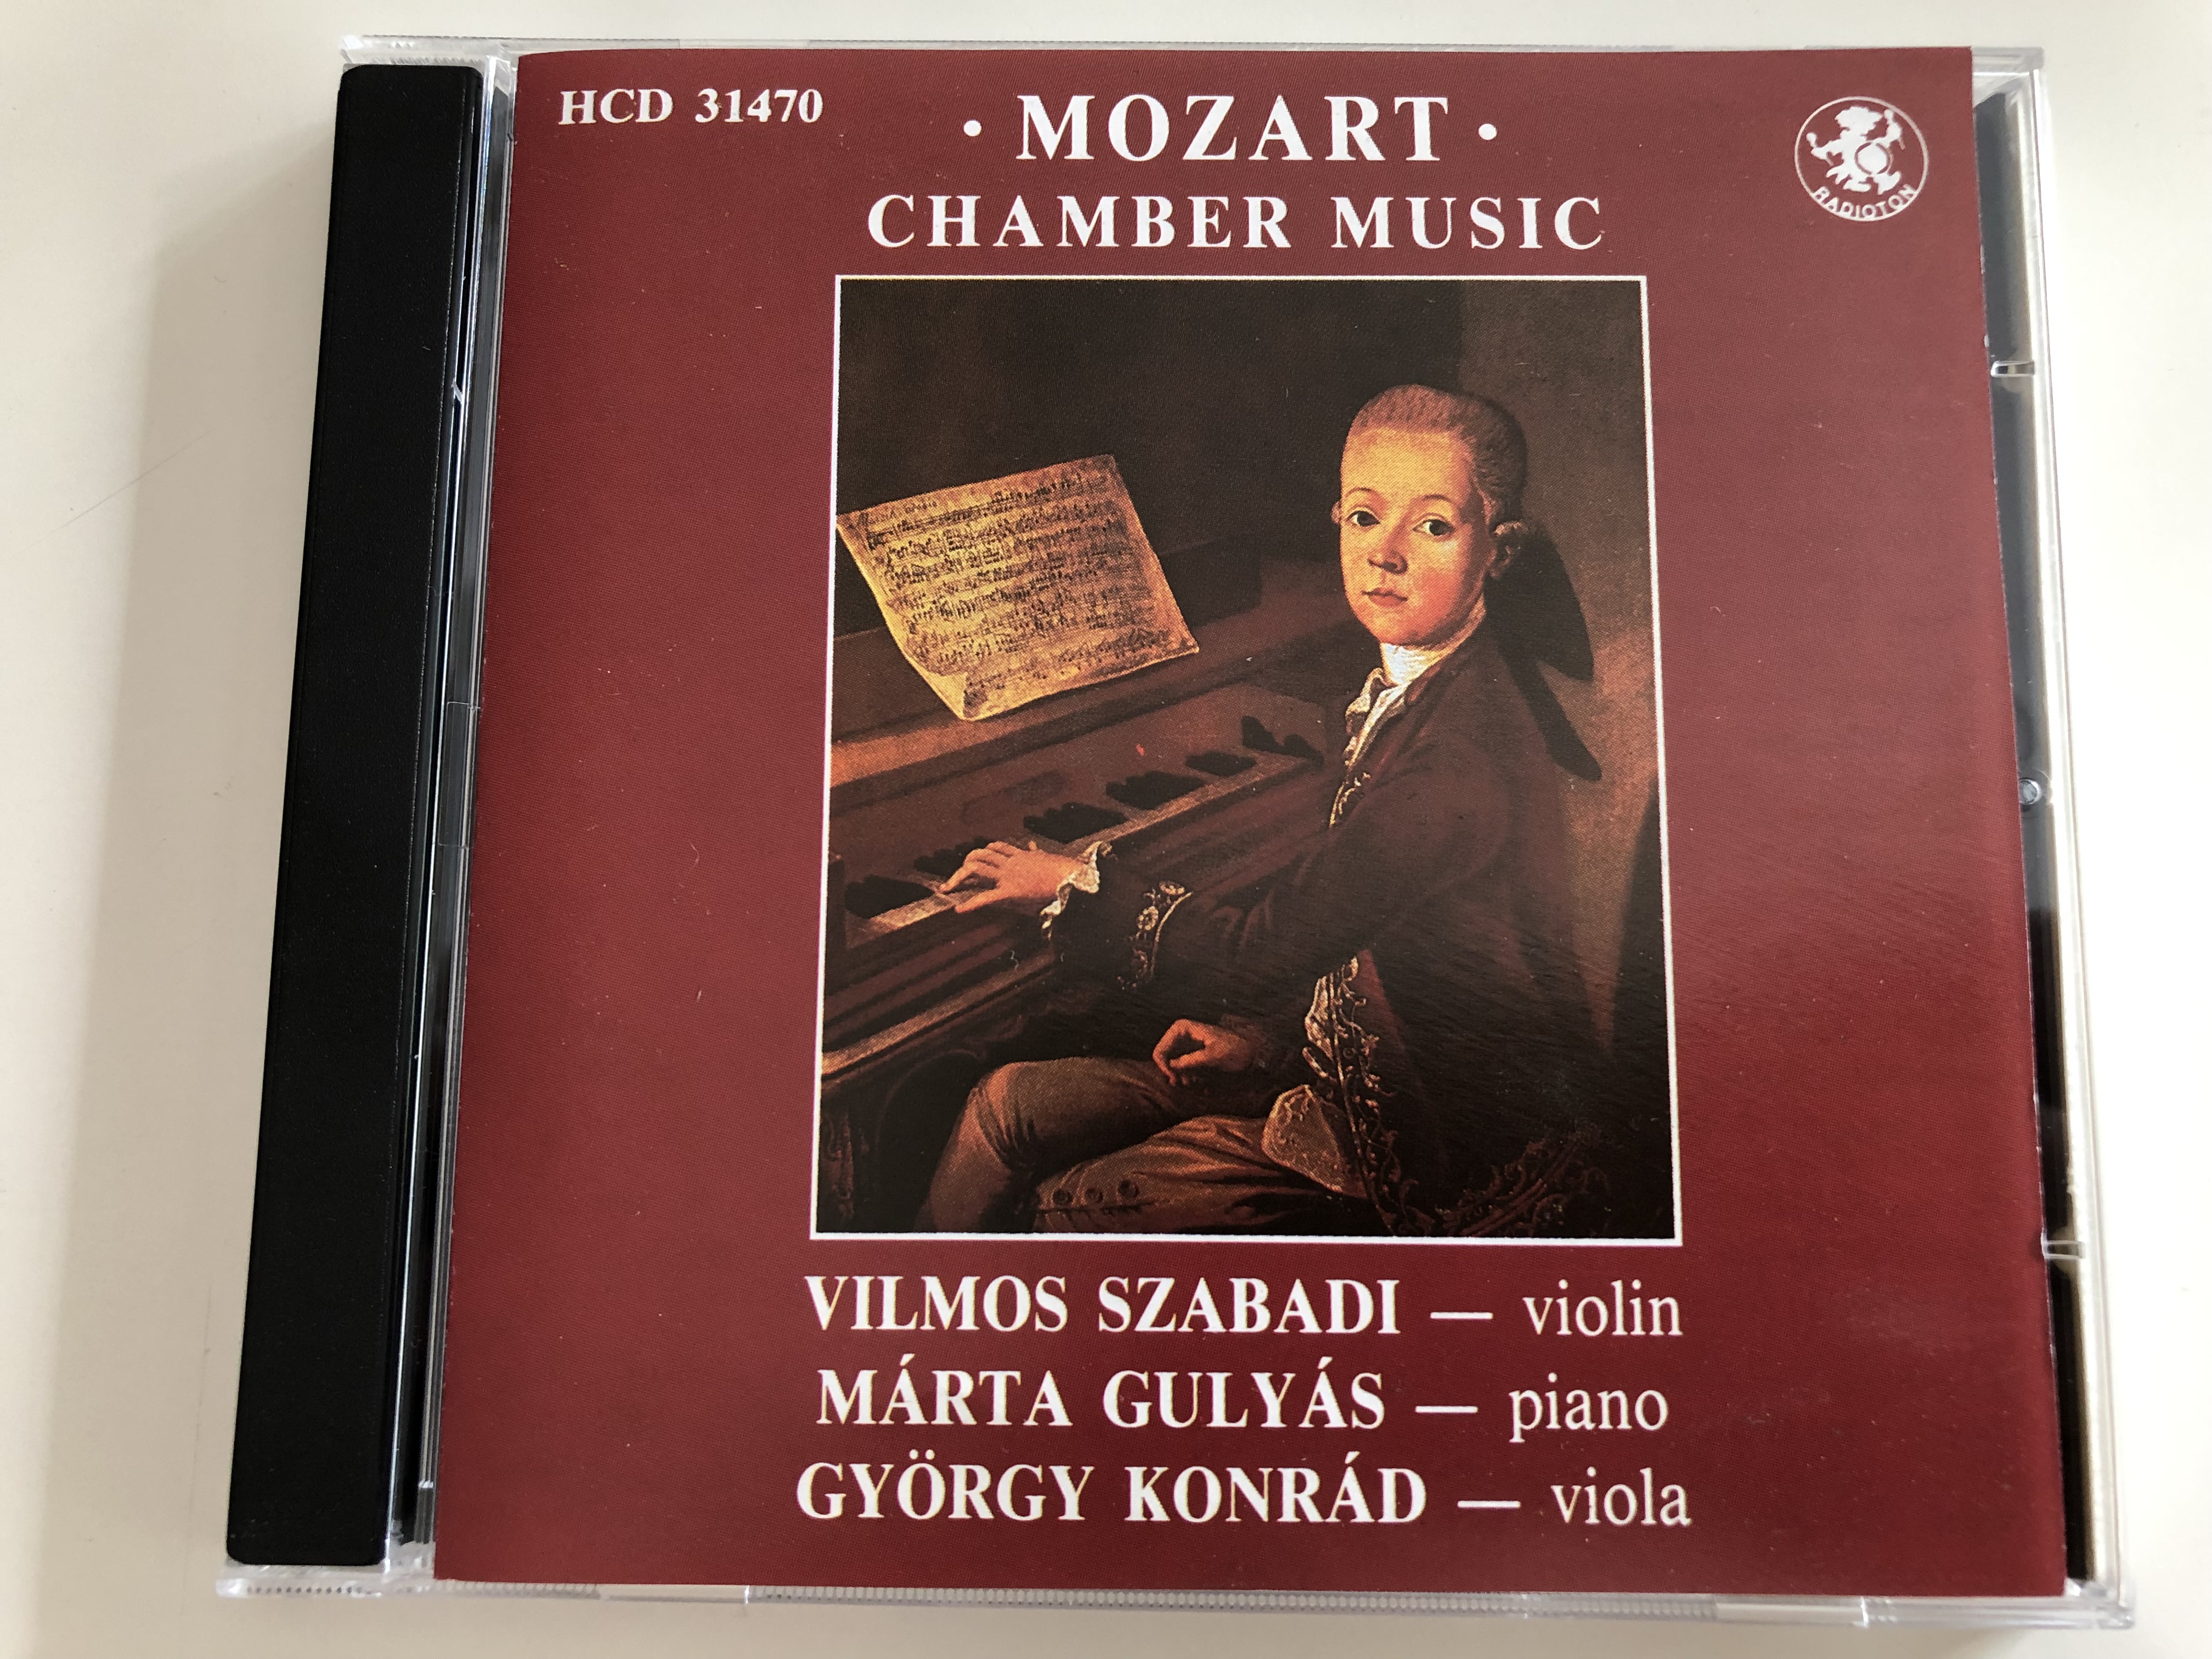 w.-a.-mozart-chamber-music-vilmos-szabadi-violin-m-rta-guly-s-piano-gy-rgy-konr-d-viola-hcd-31470-audio-cd-1991-1-.jpg